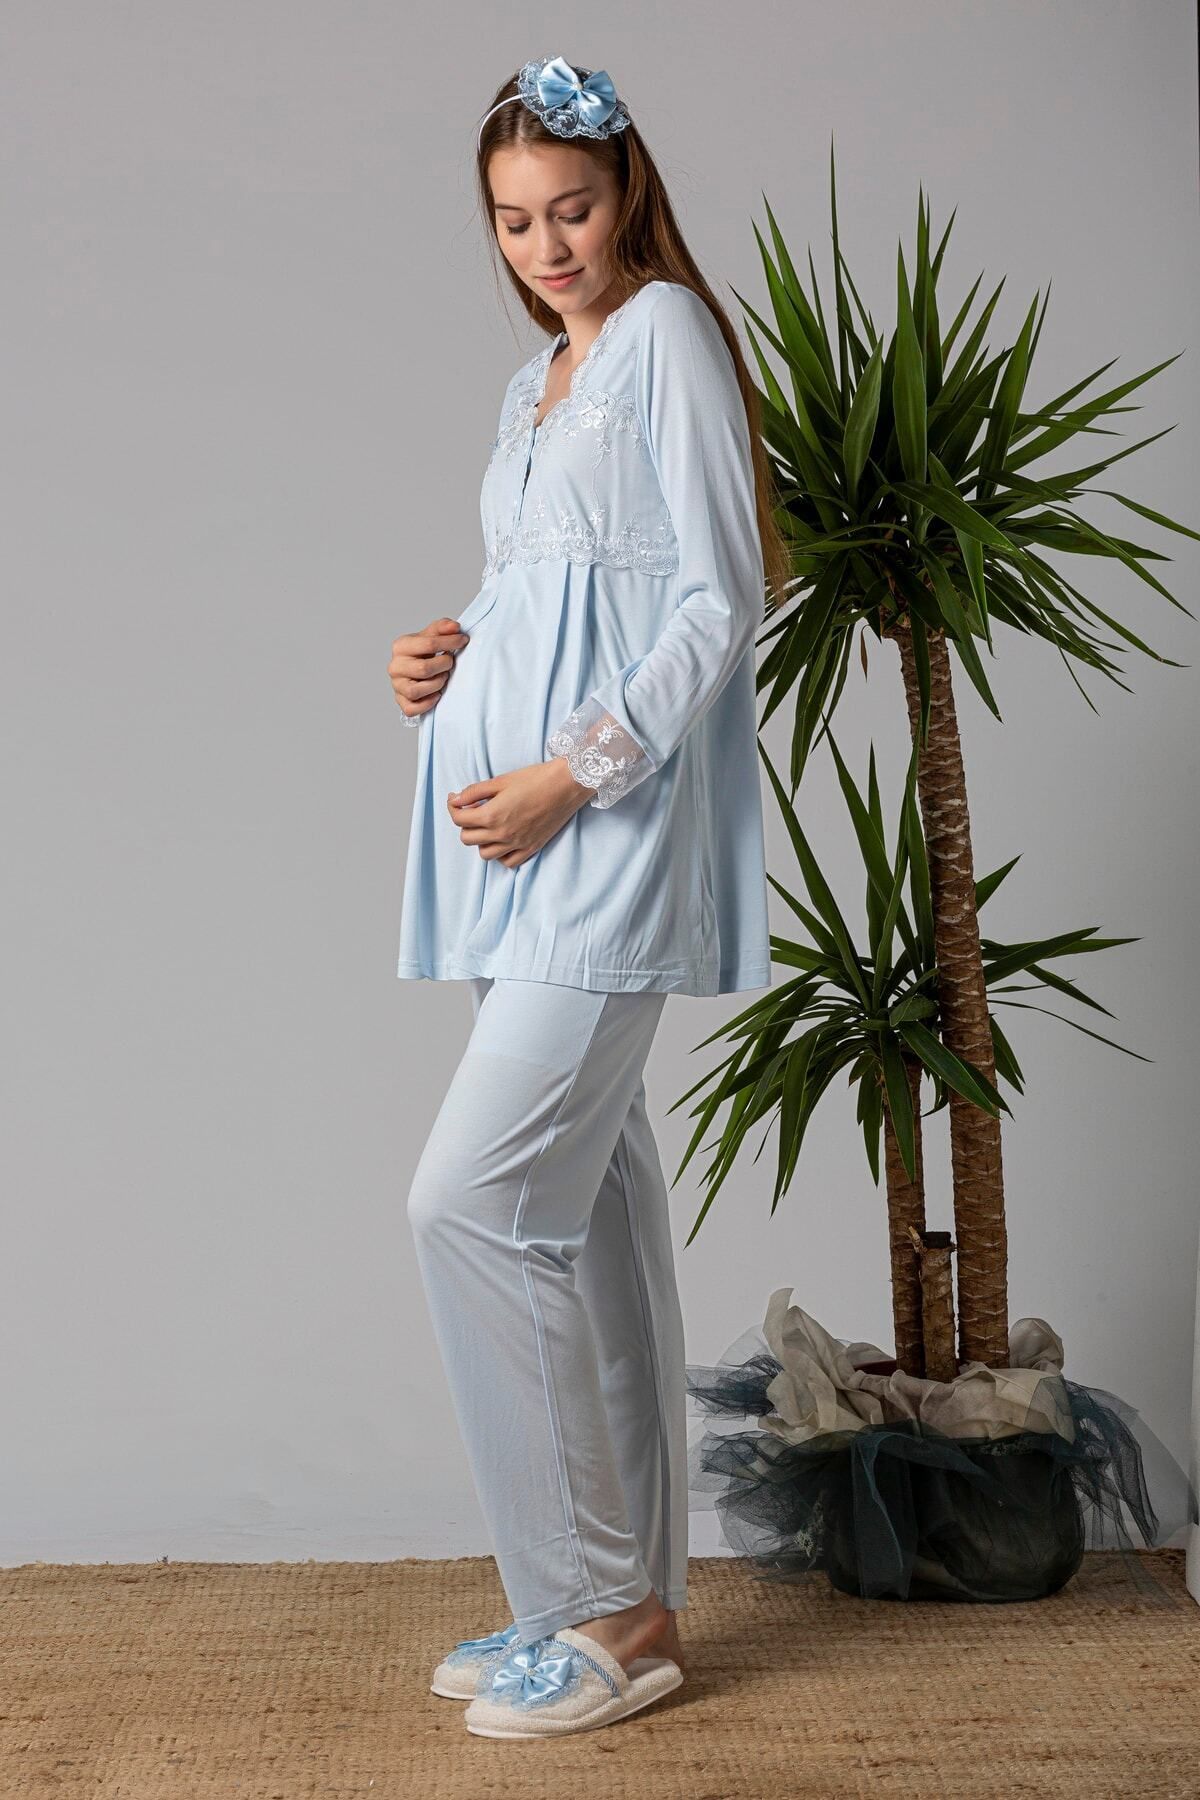 kaktüslohusa Effort Women's Cherry Long Sleeve Maternity Nightgown 8093 -  Trendyol